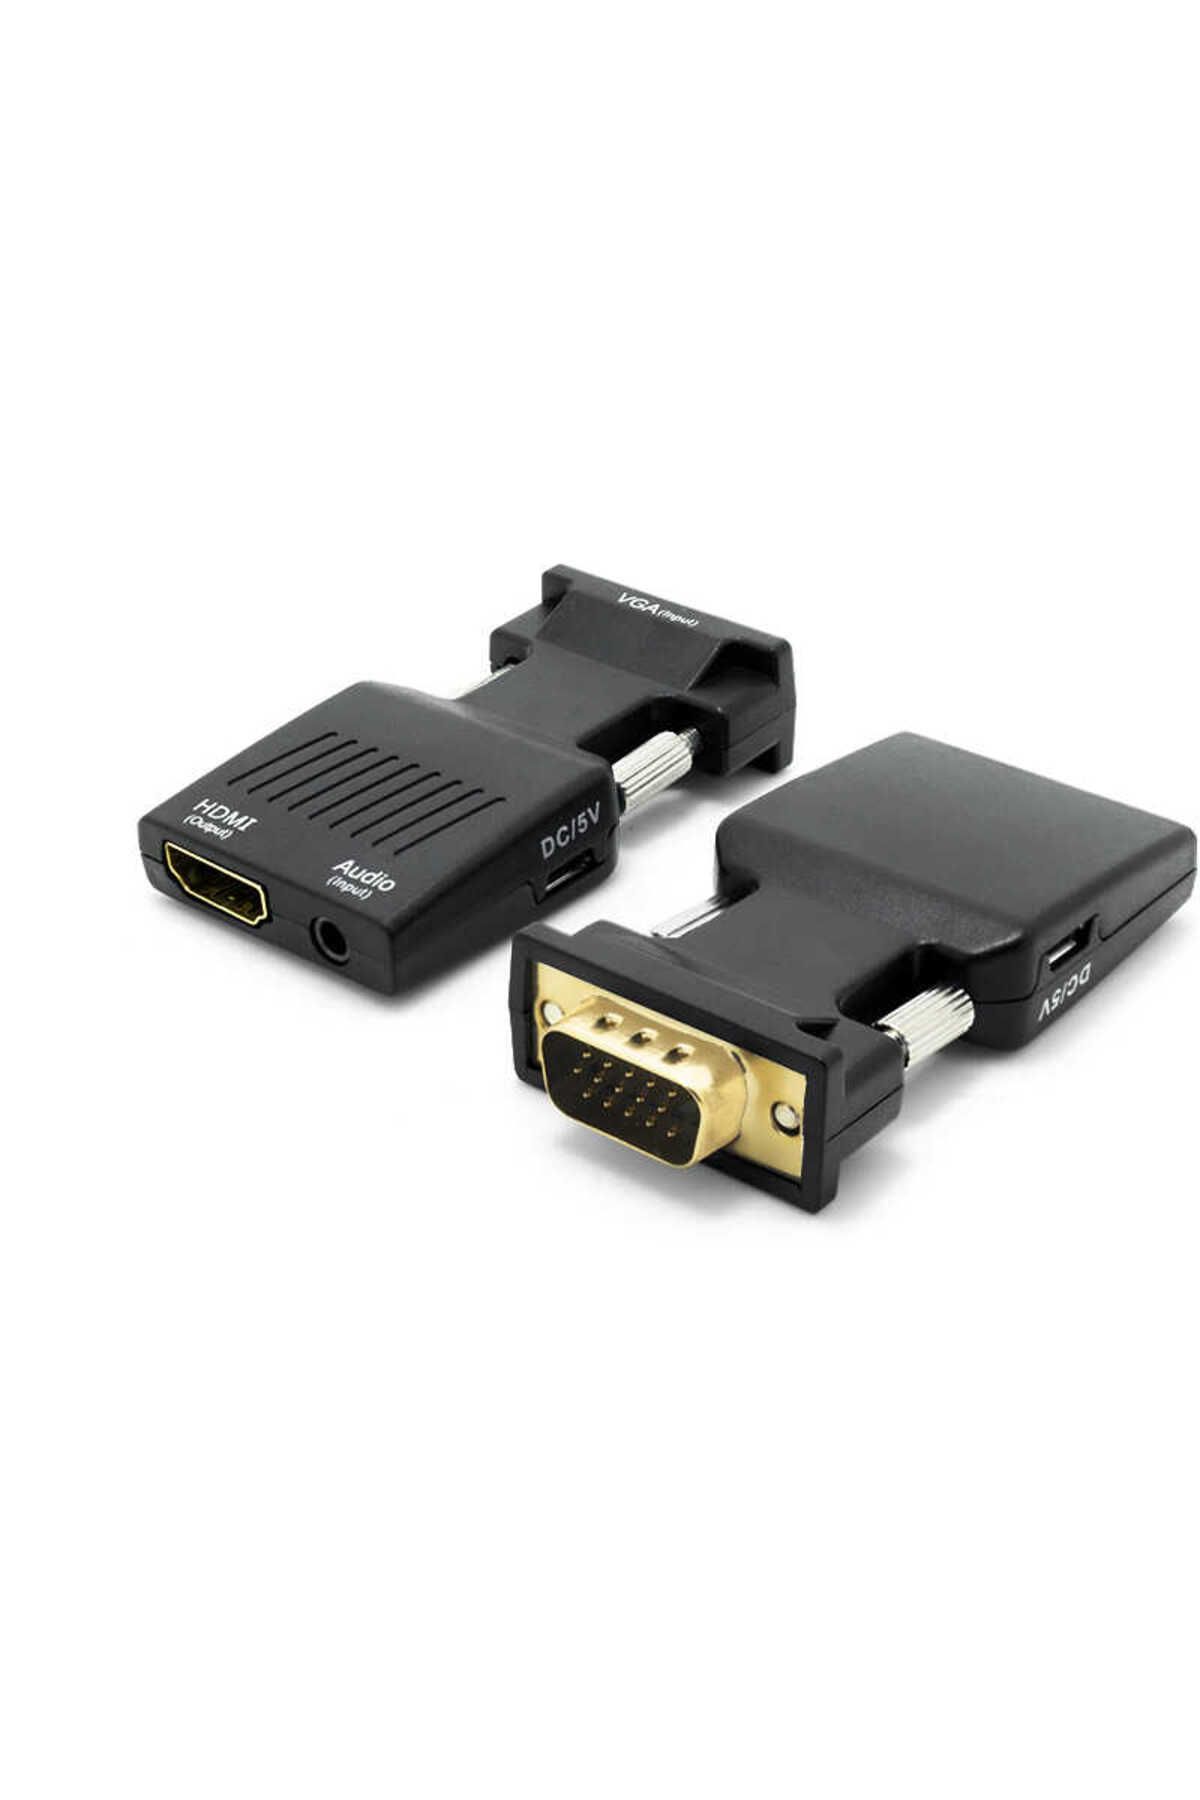 Dolia VGA Girişli Cihazlar İçin HDMI Dönüştürücü Adaptör (1080P 60Hz, 3.5mm Ses Jack ve Micro USB Girişi)